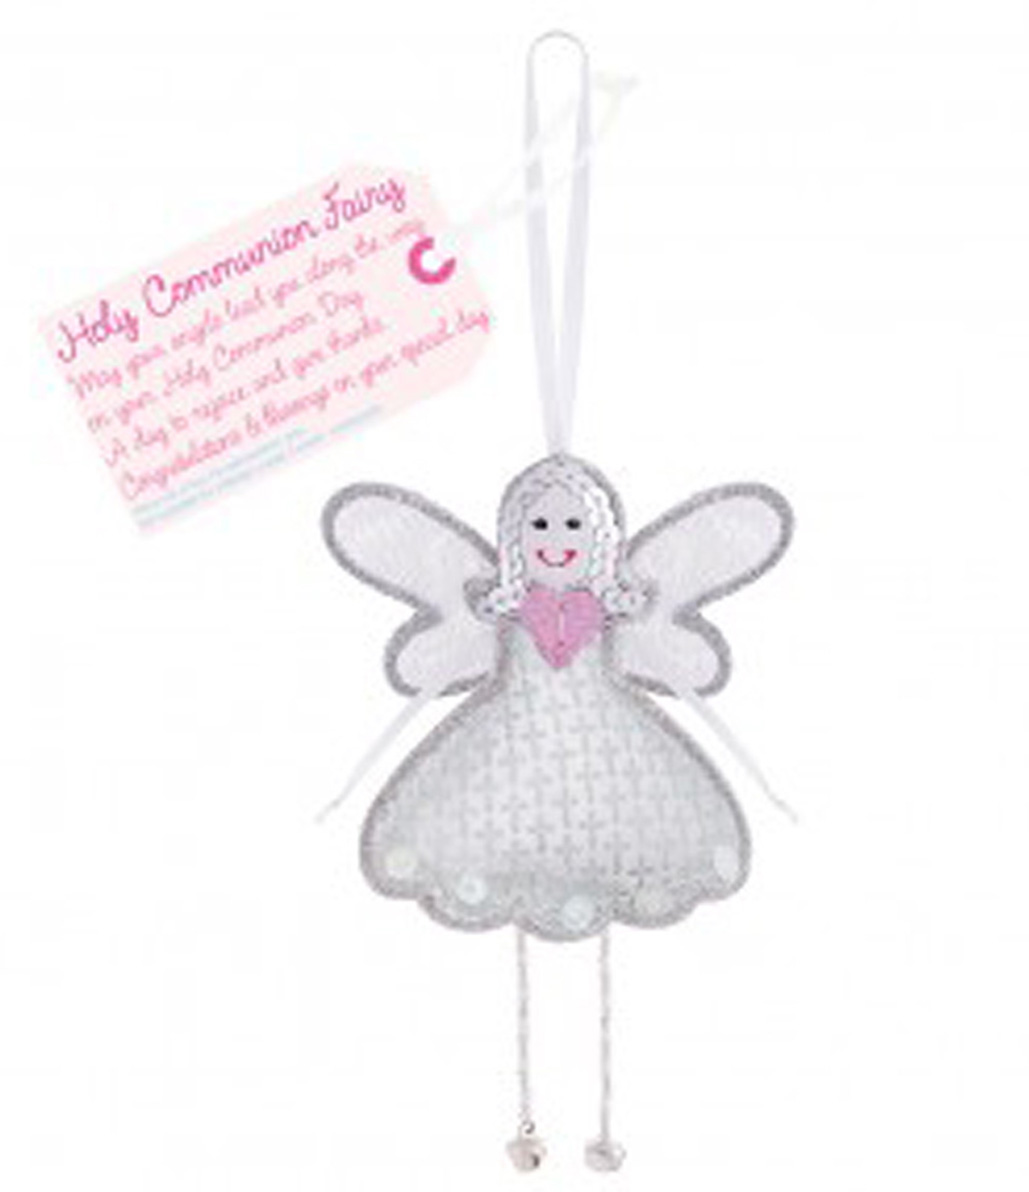 Communion fairy gift - Free Trade Fairy-0